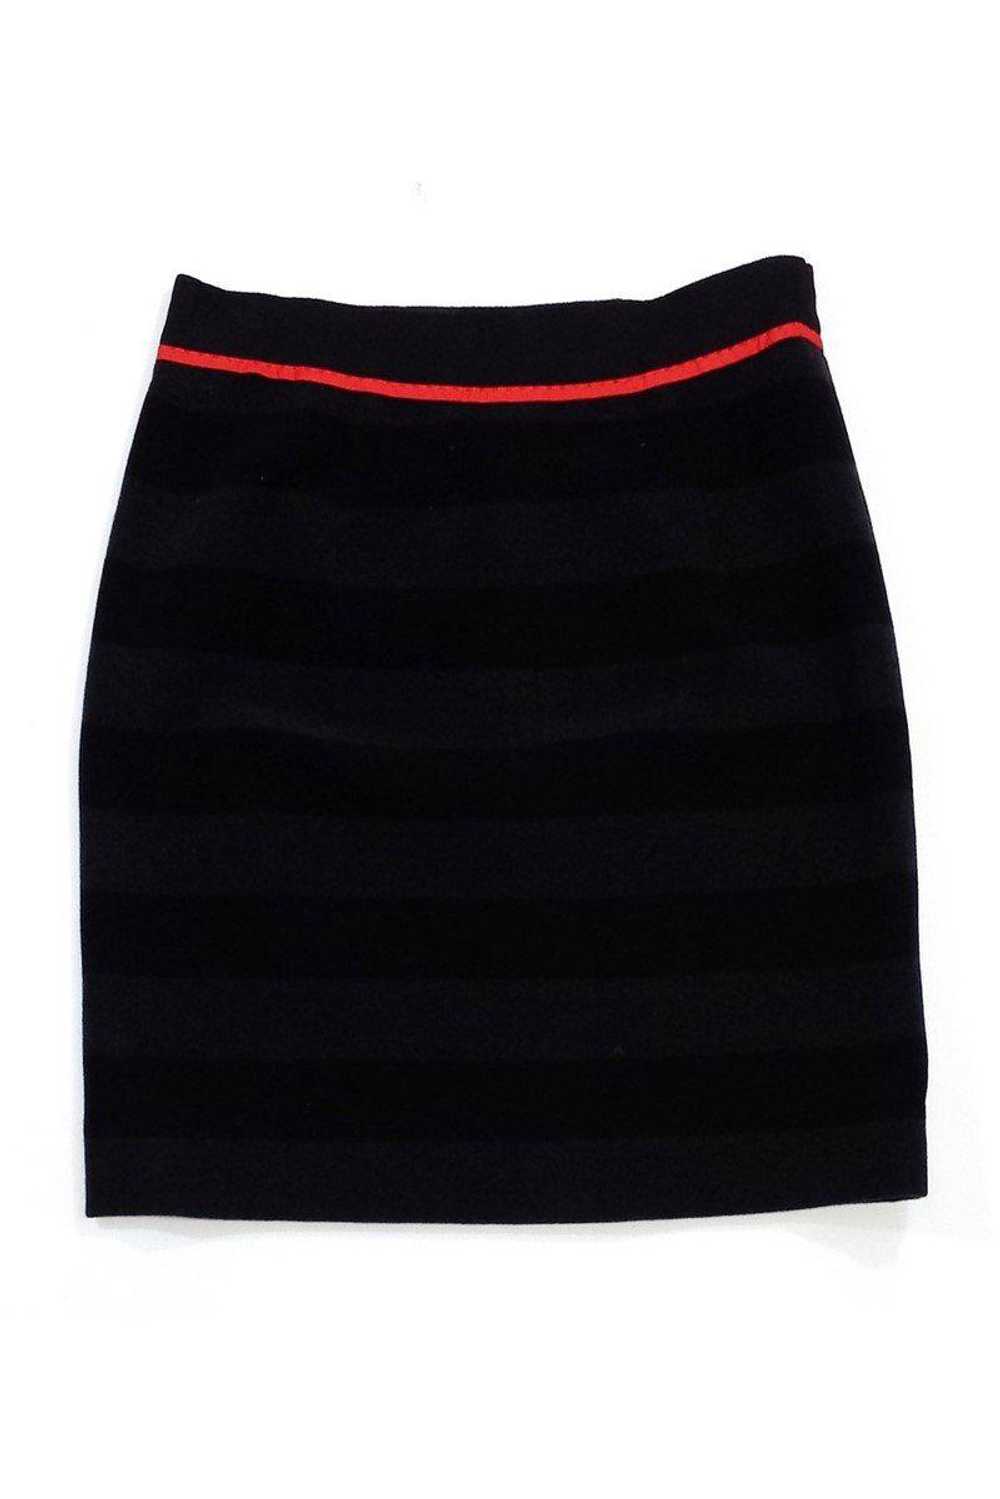 Per Se - Grey & Black Wool Striped Skirt Sz 4 - image 2